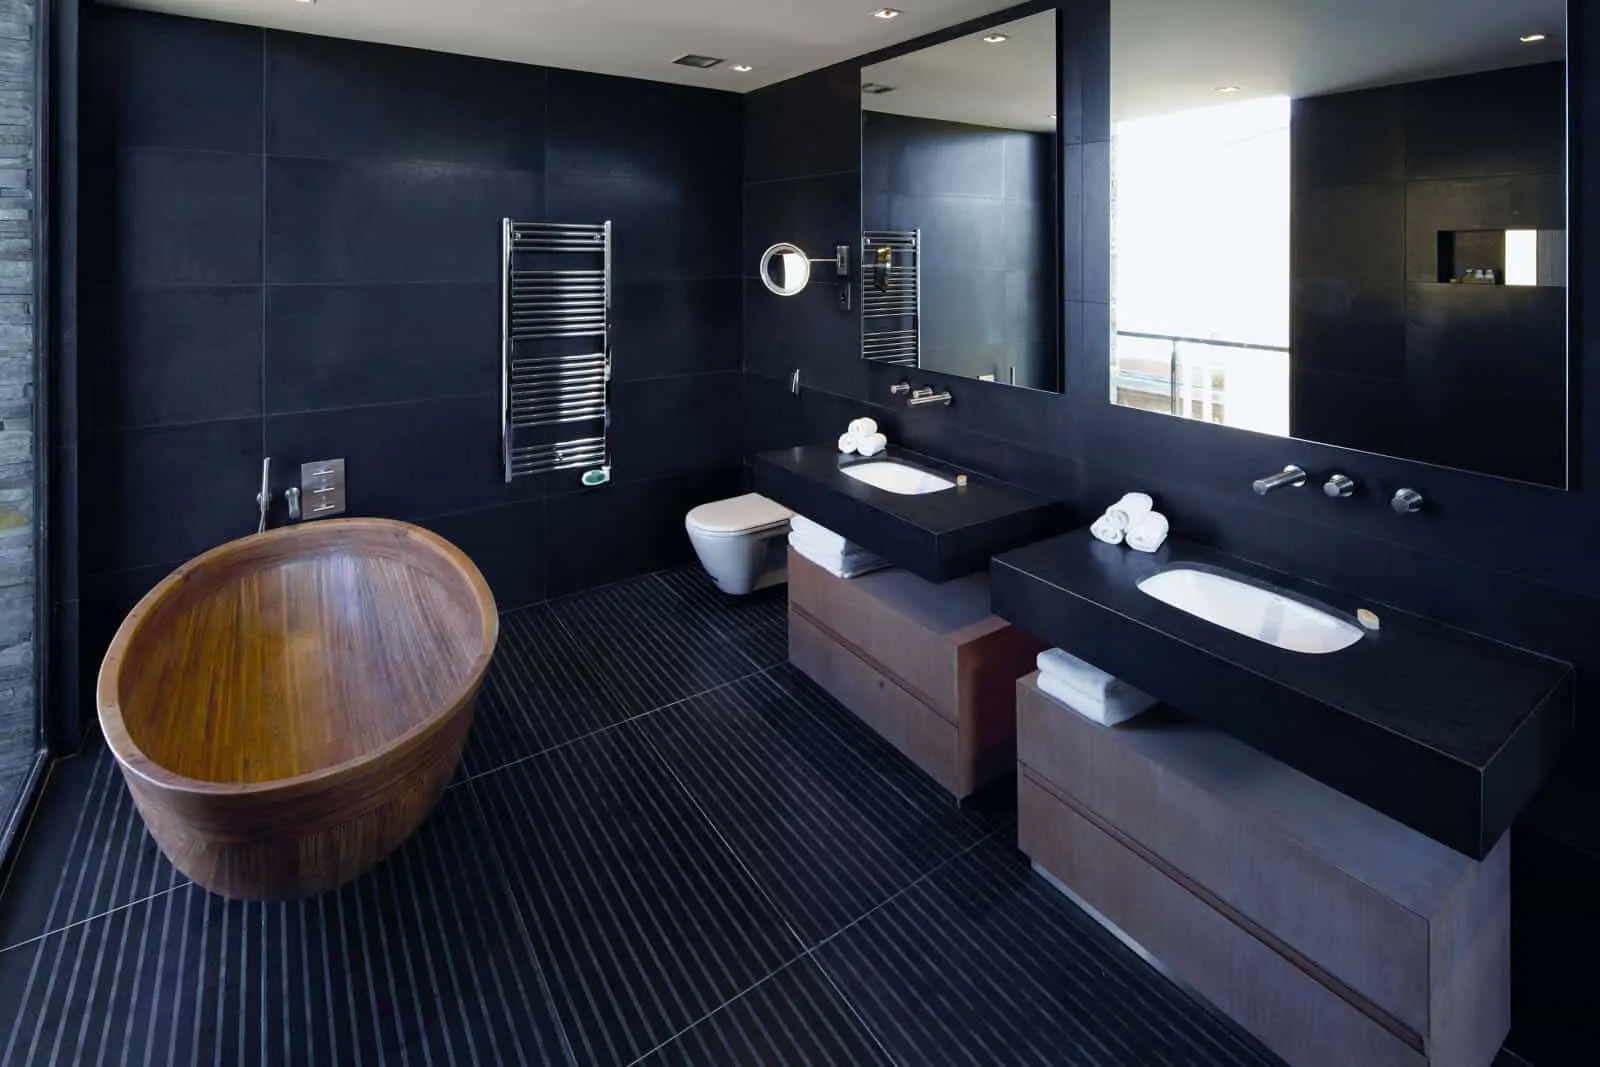 New Bathroom Decor Design 2021: Styling Tips